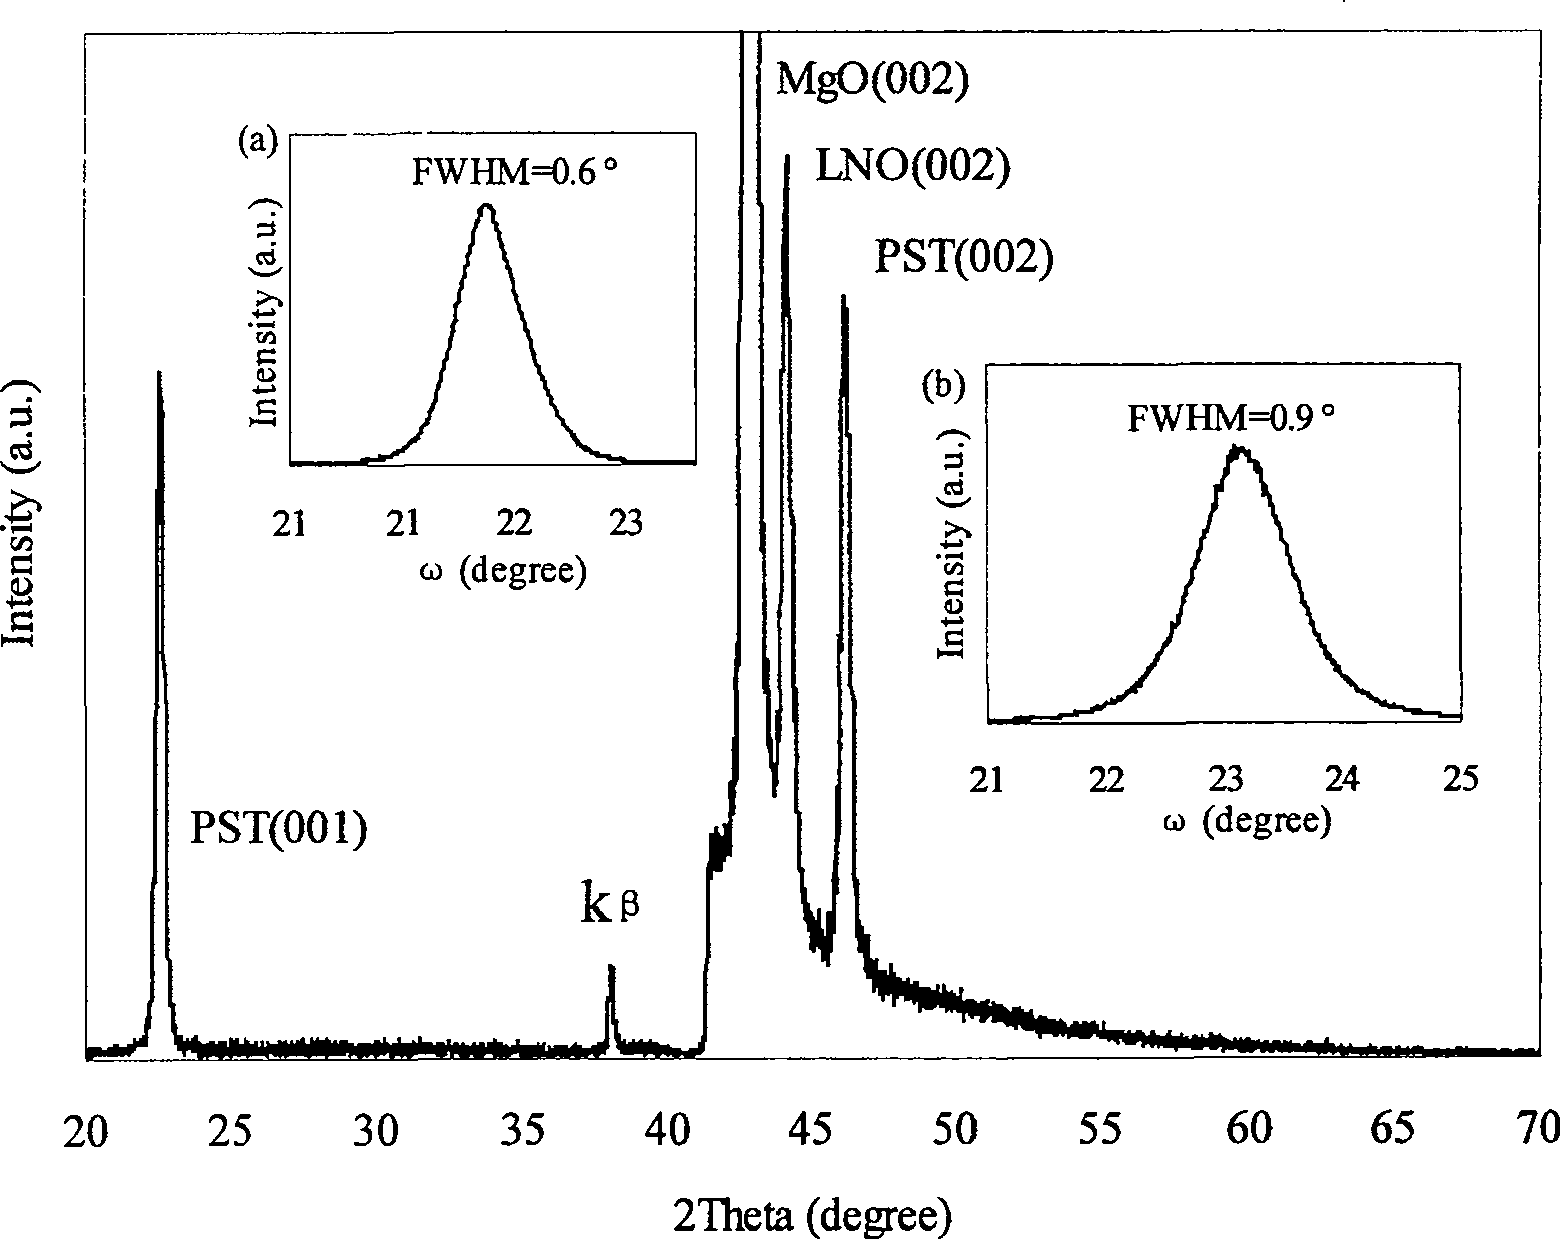 Epitaxy strontium lead titanate film with LiNiO2 cushioning layer